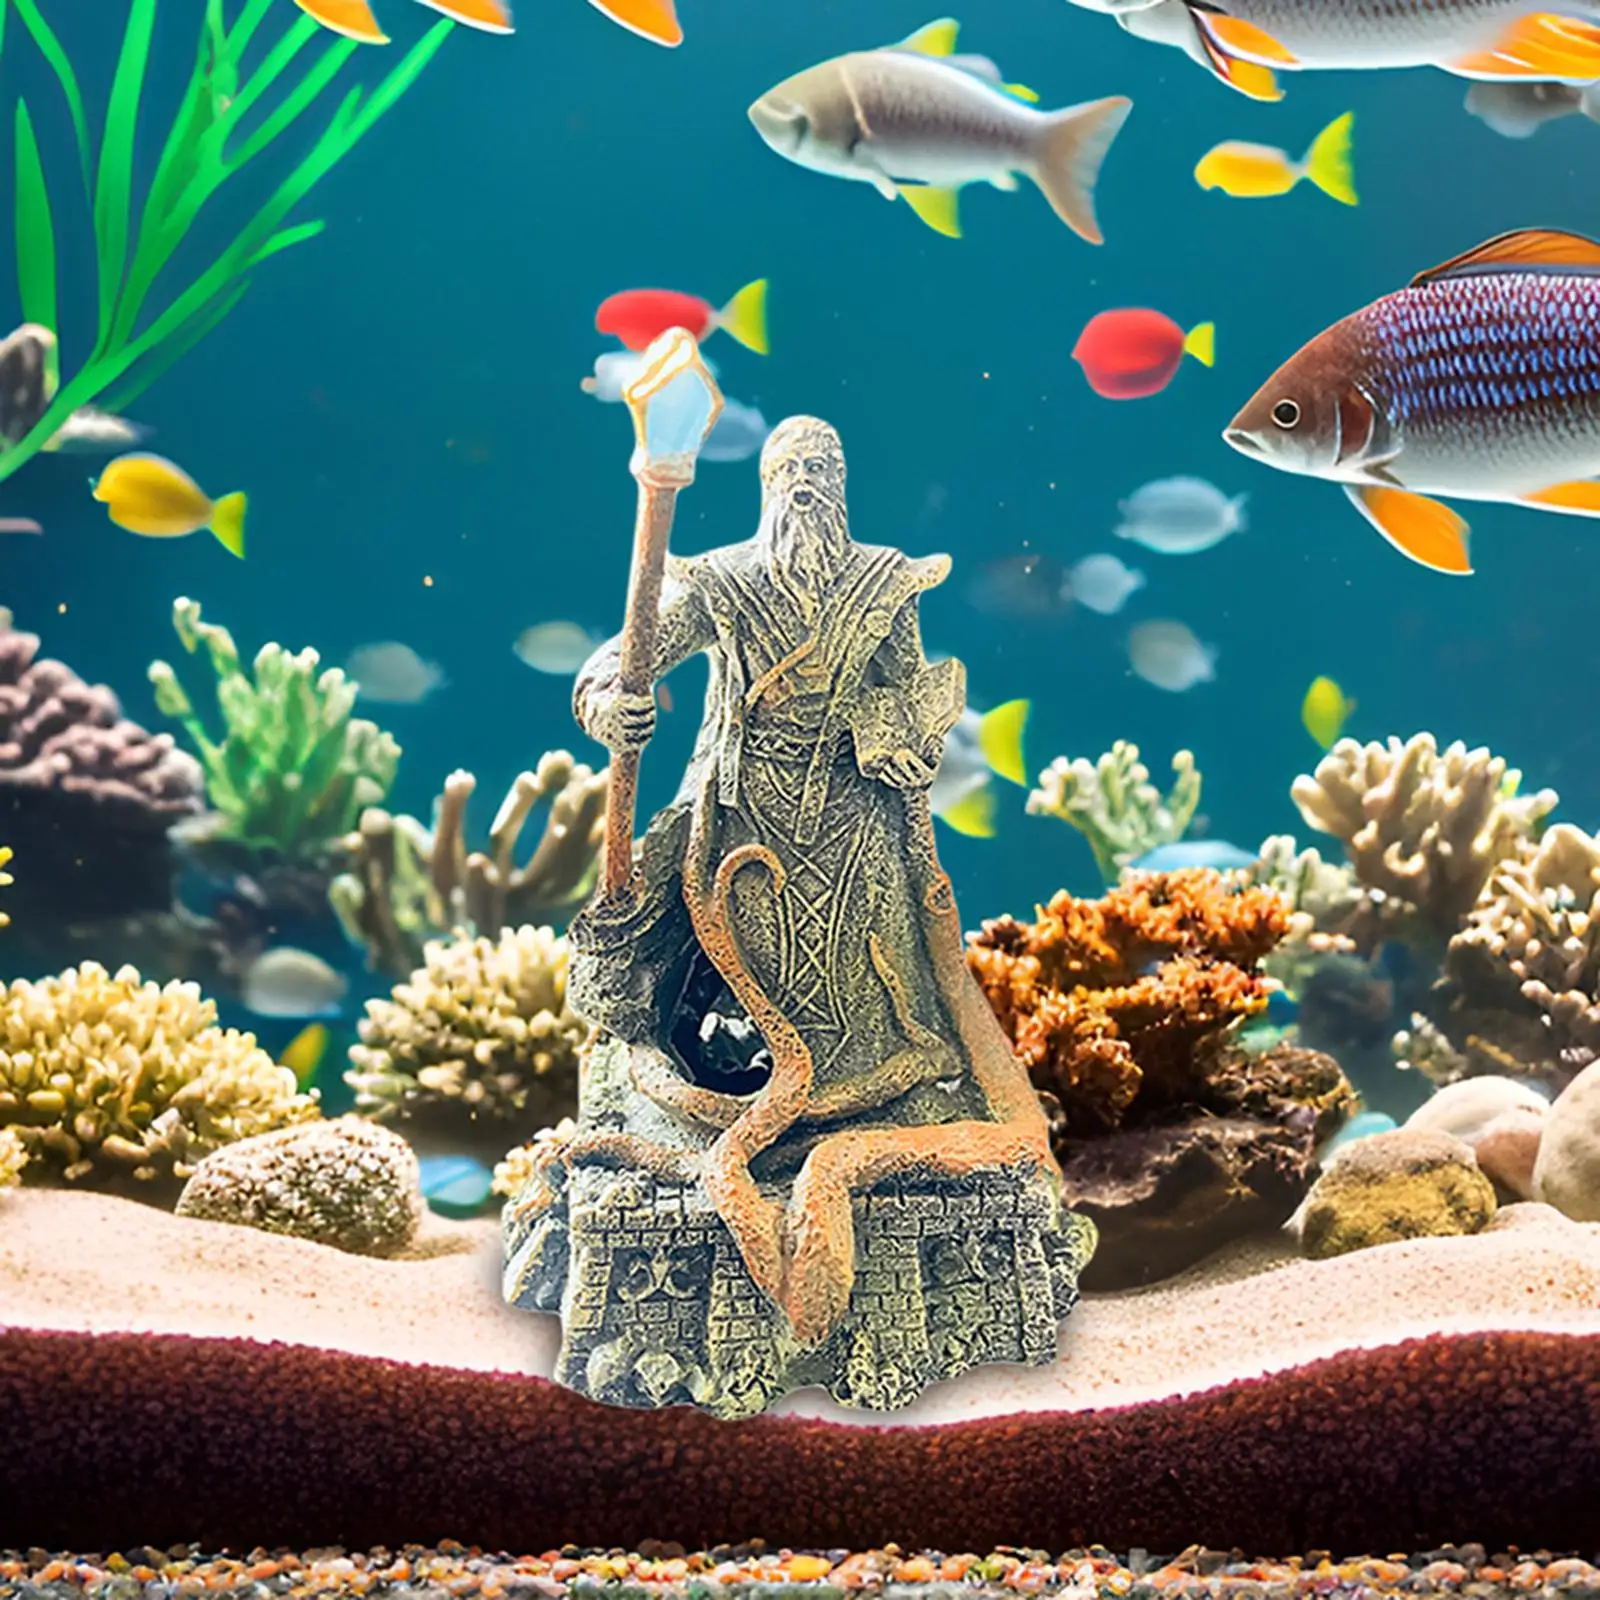 Aquarium Decoration Mage Figurine Resin Desktop Statue Hideout Cave Fish Tank Decor for Micro Landscape Garden Lawn Patio Gift